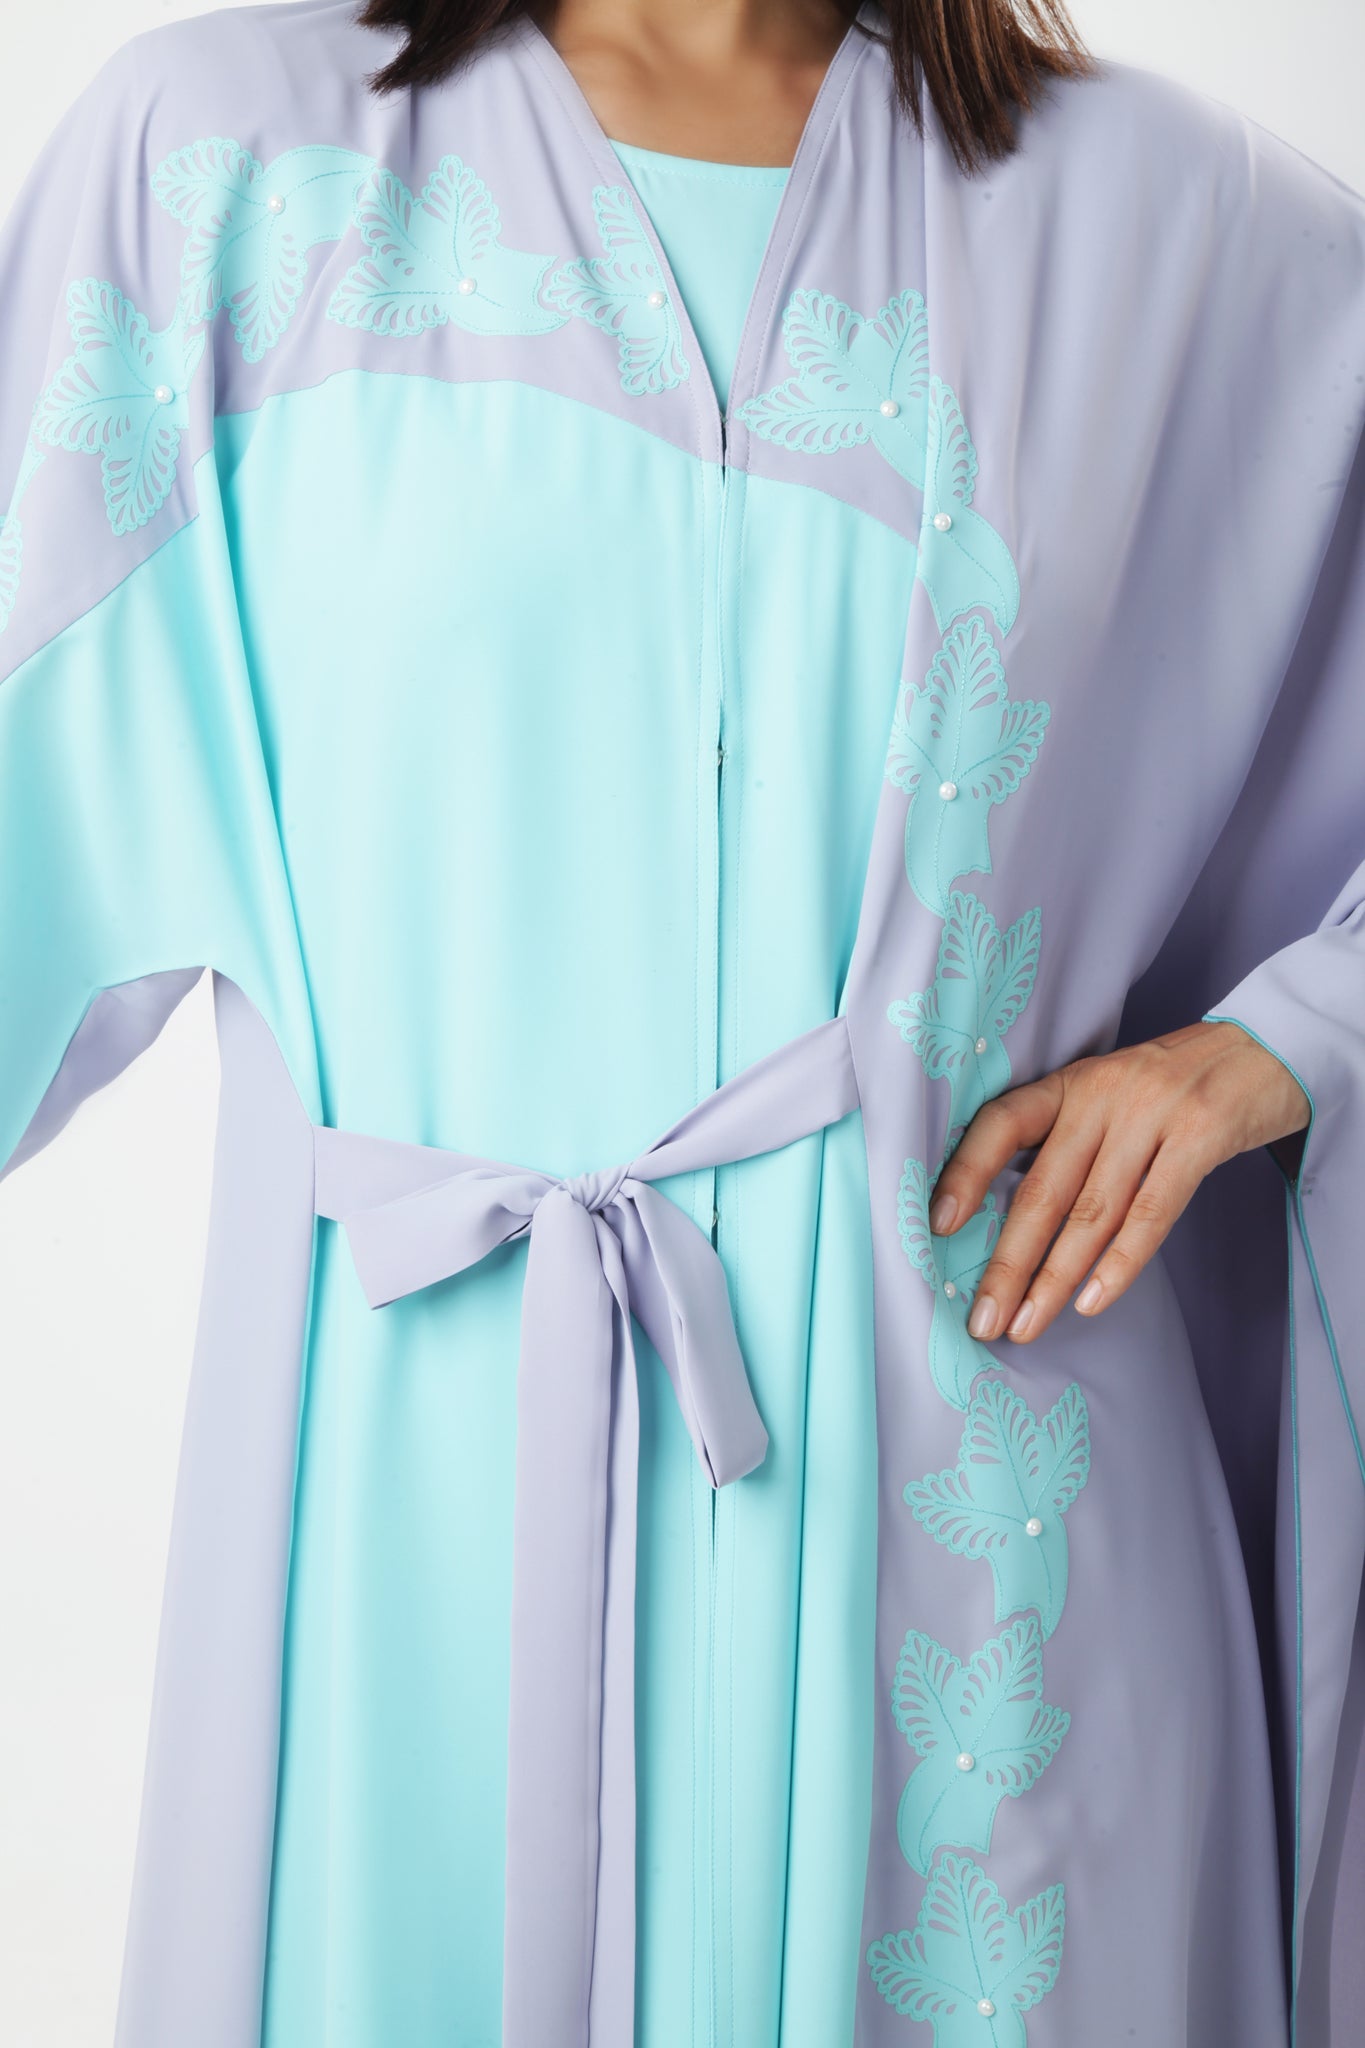 Dual Color Modest Abaya Design